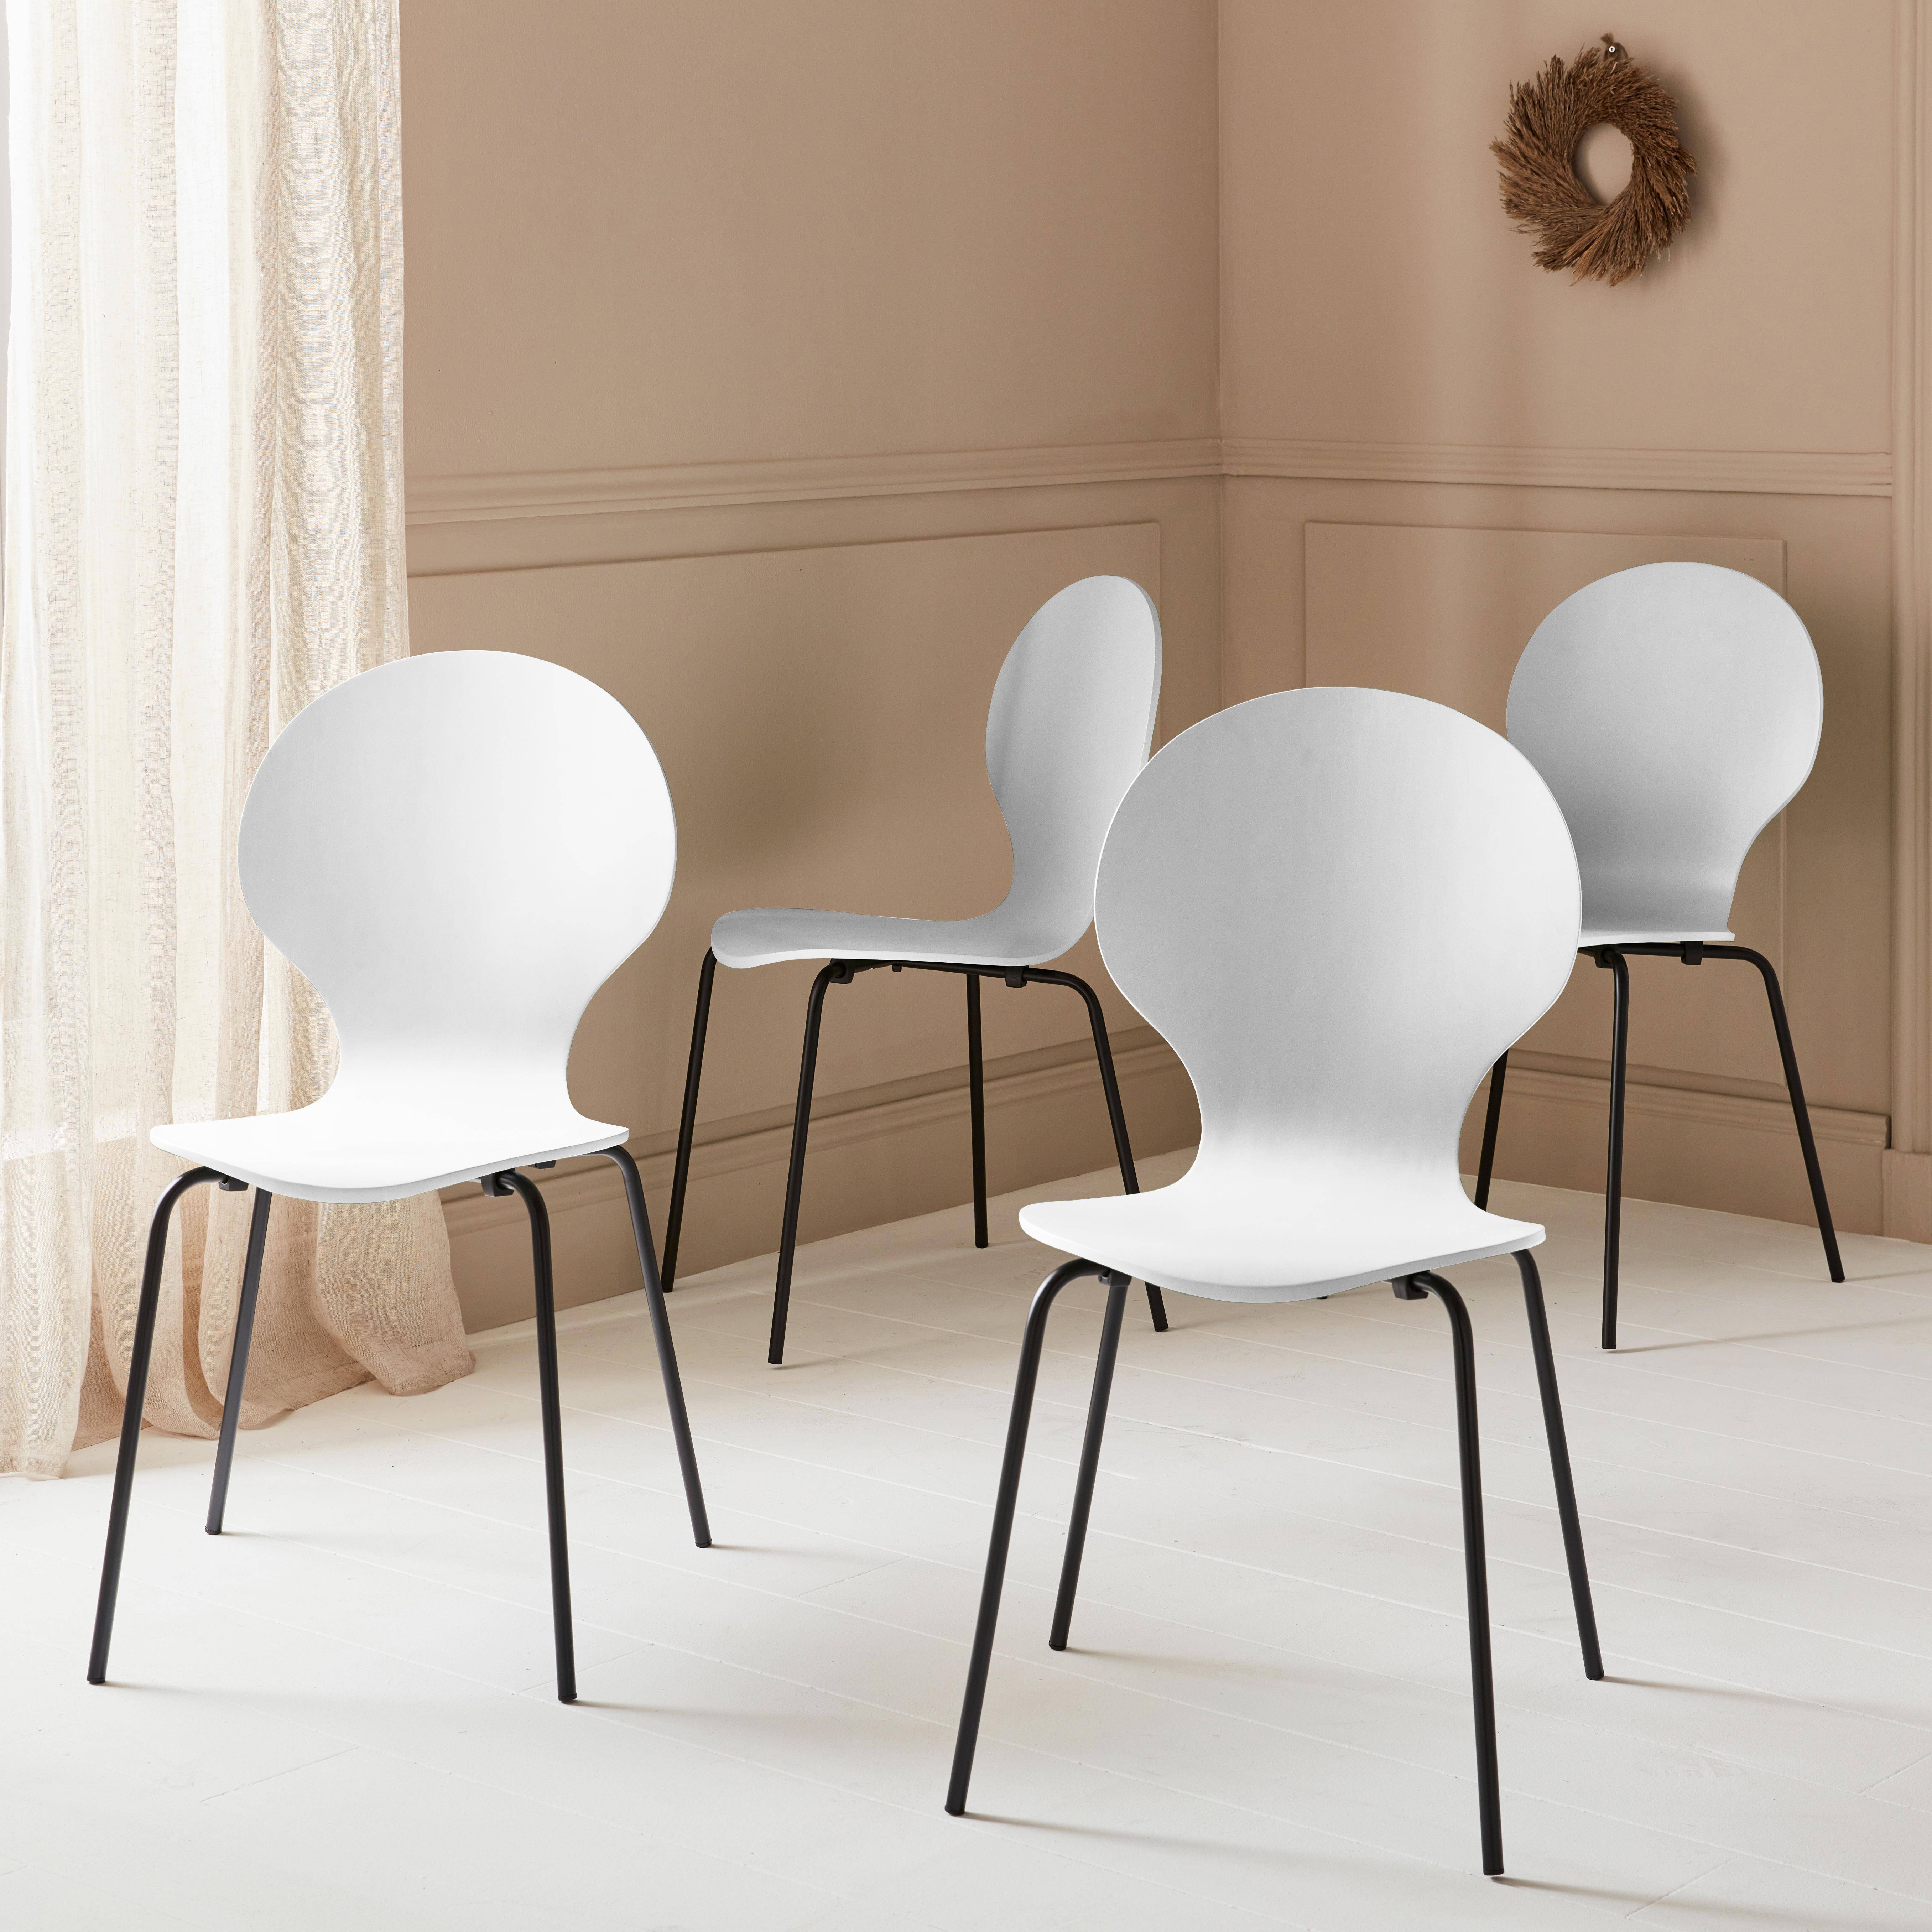 Set van 4 witte retro stapelstoelen, hevea hout en multiplex, stalen poten, Naomi, B 43 x D 48 x H 87cm Photo1